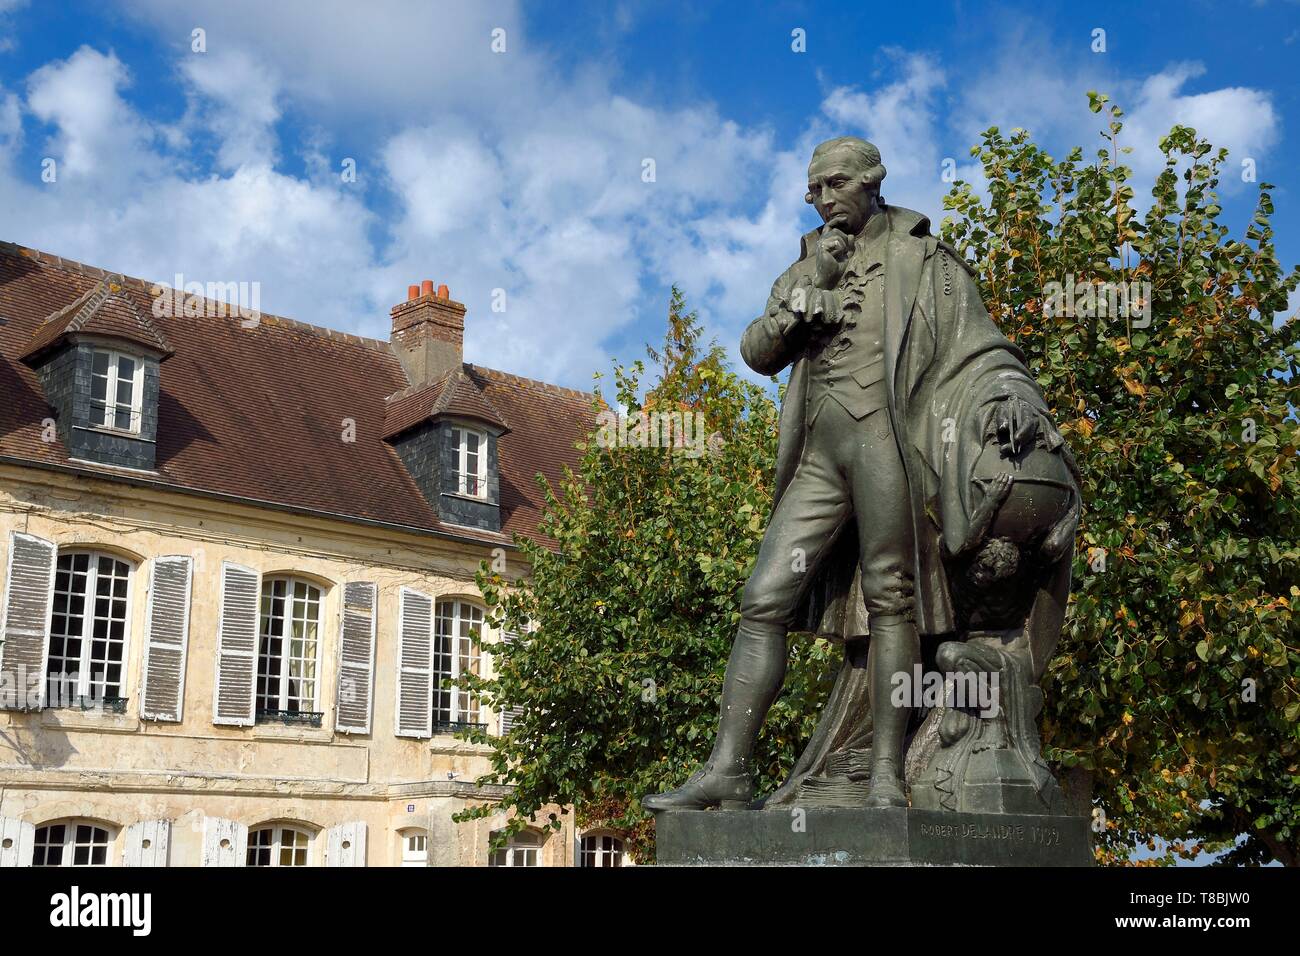 Francia, Calvados, Pays d'Auge, Beaumont En Auge, statua di Pierre-Simon de Laplace, matematico, astronomo, fisico e uomo politico francese Foto Stock